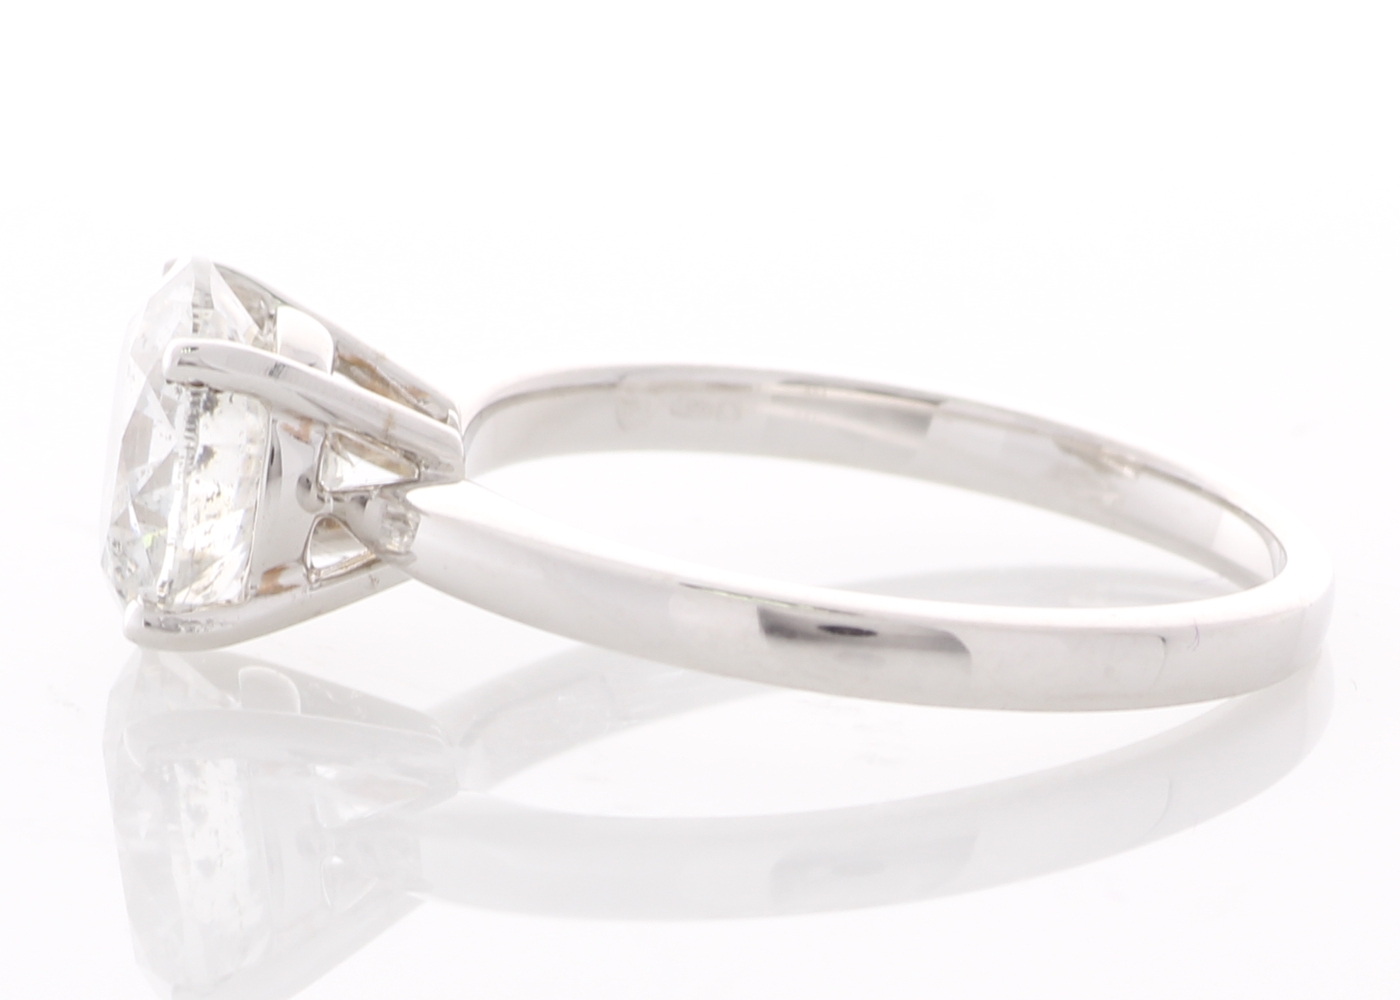 18ct White Gold Single Stone Prong Set Diamond Ring 2.01 Carats - Image 2 of 5